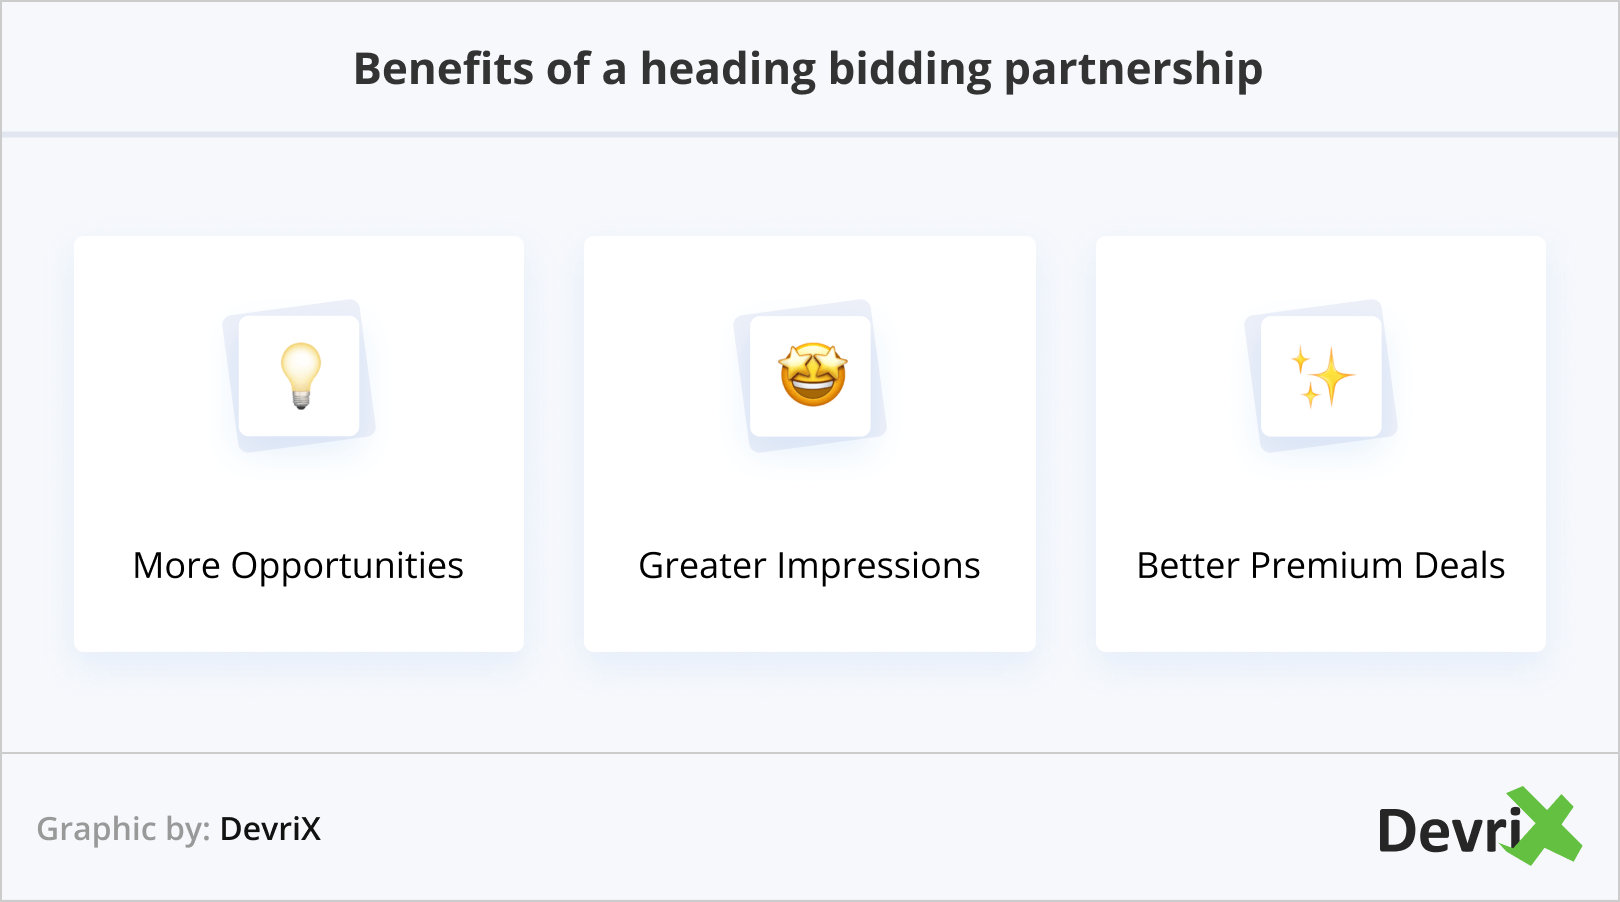 Benefits of a heading bidding partnership